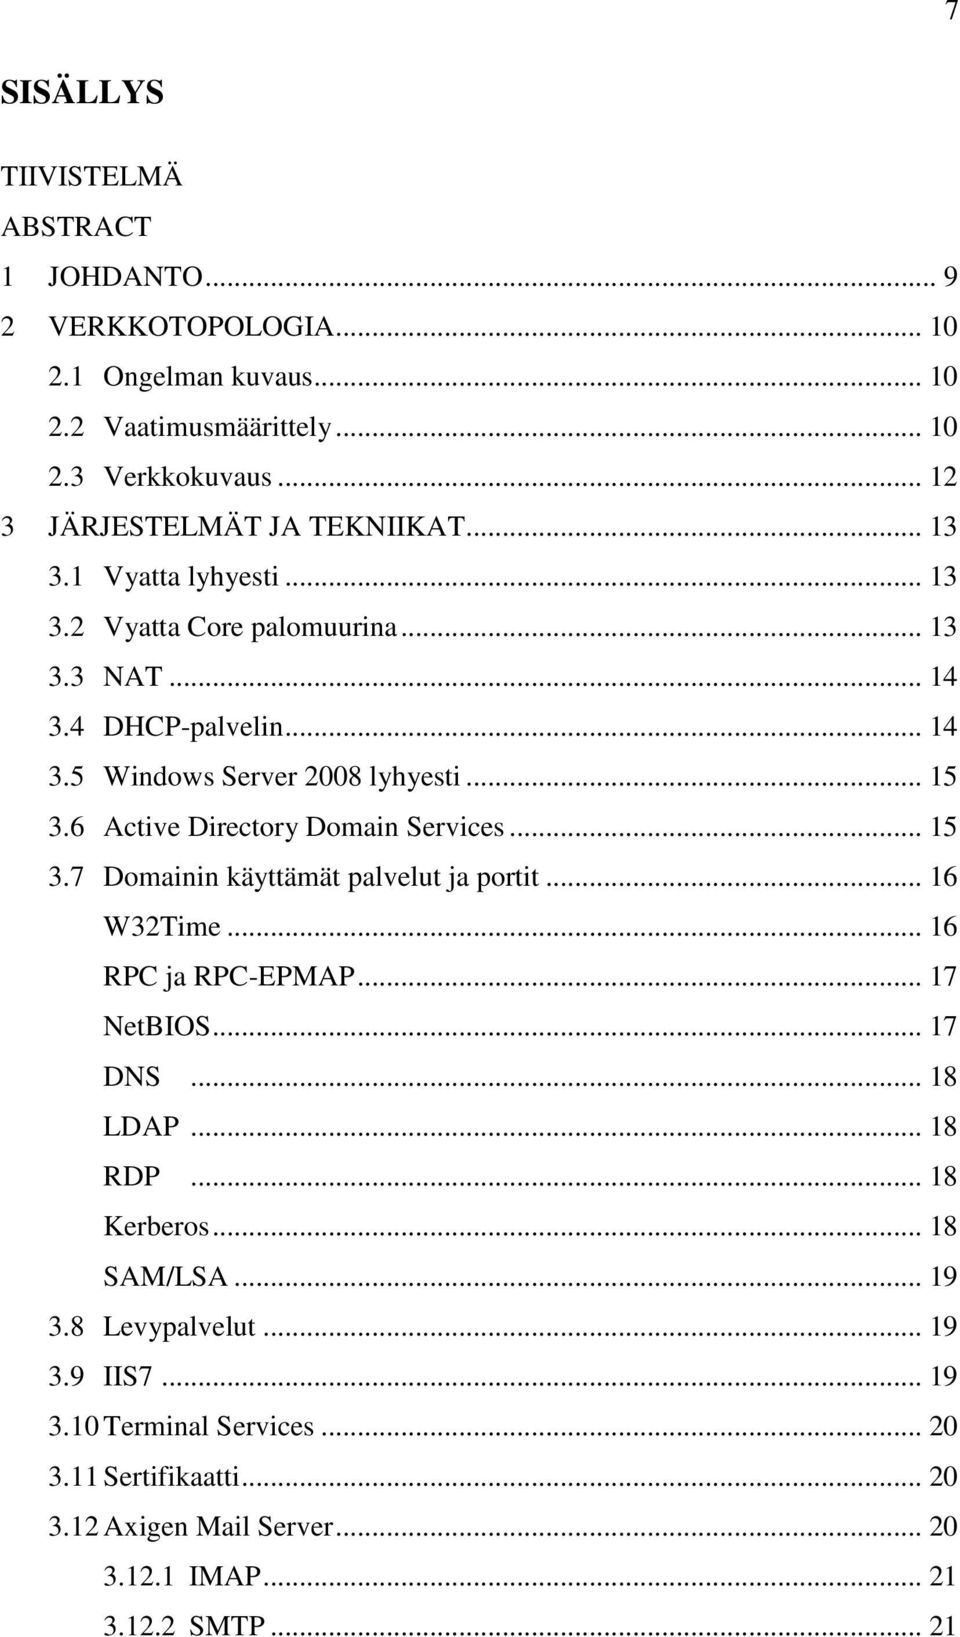 .. 15 3.6 Active Directory Domain Services... 15 3.7 Domainin käyttämät palvelut ja portit... 16 W32Time... 16 RPC ja RPC-EPMAP... 17 NetBIOS... 17 DNS... 18 LDAP.